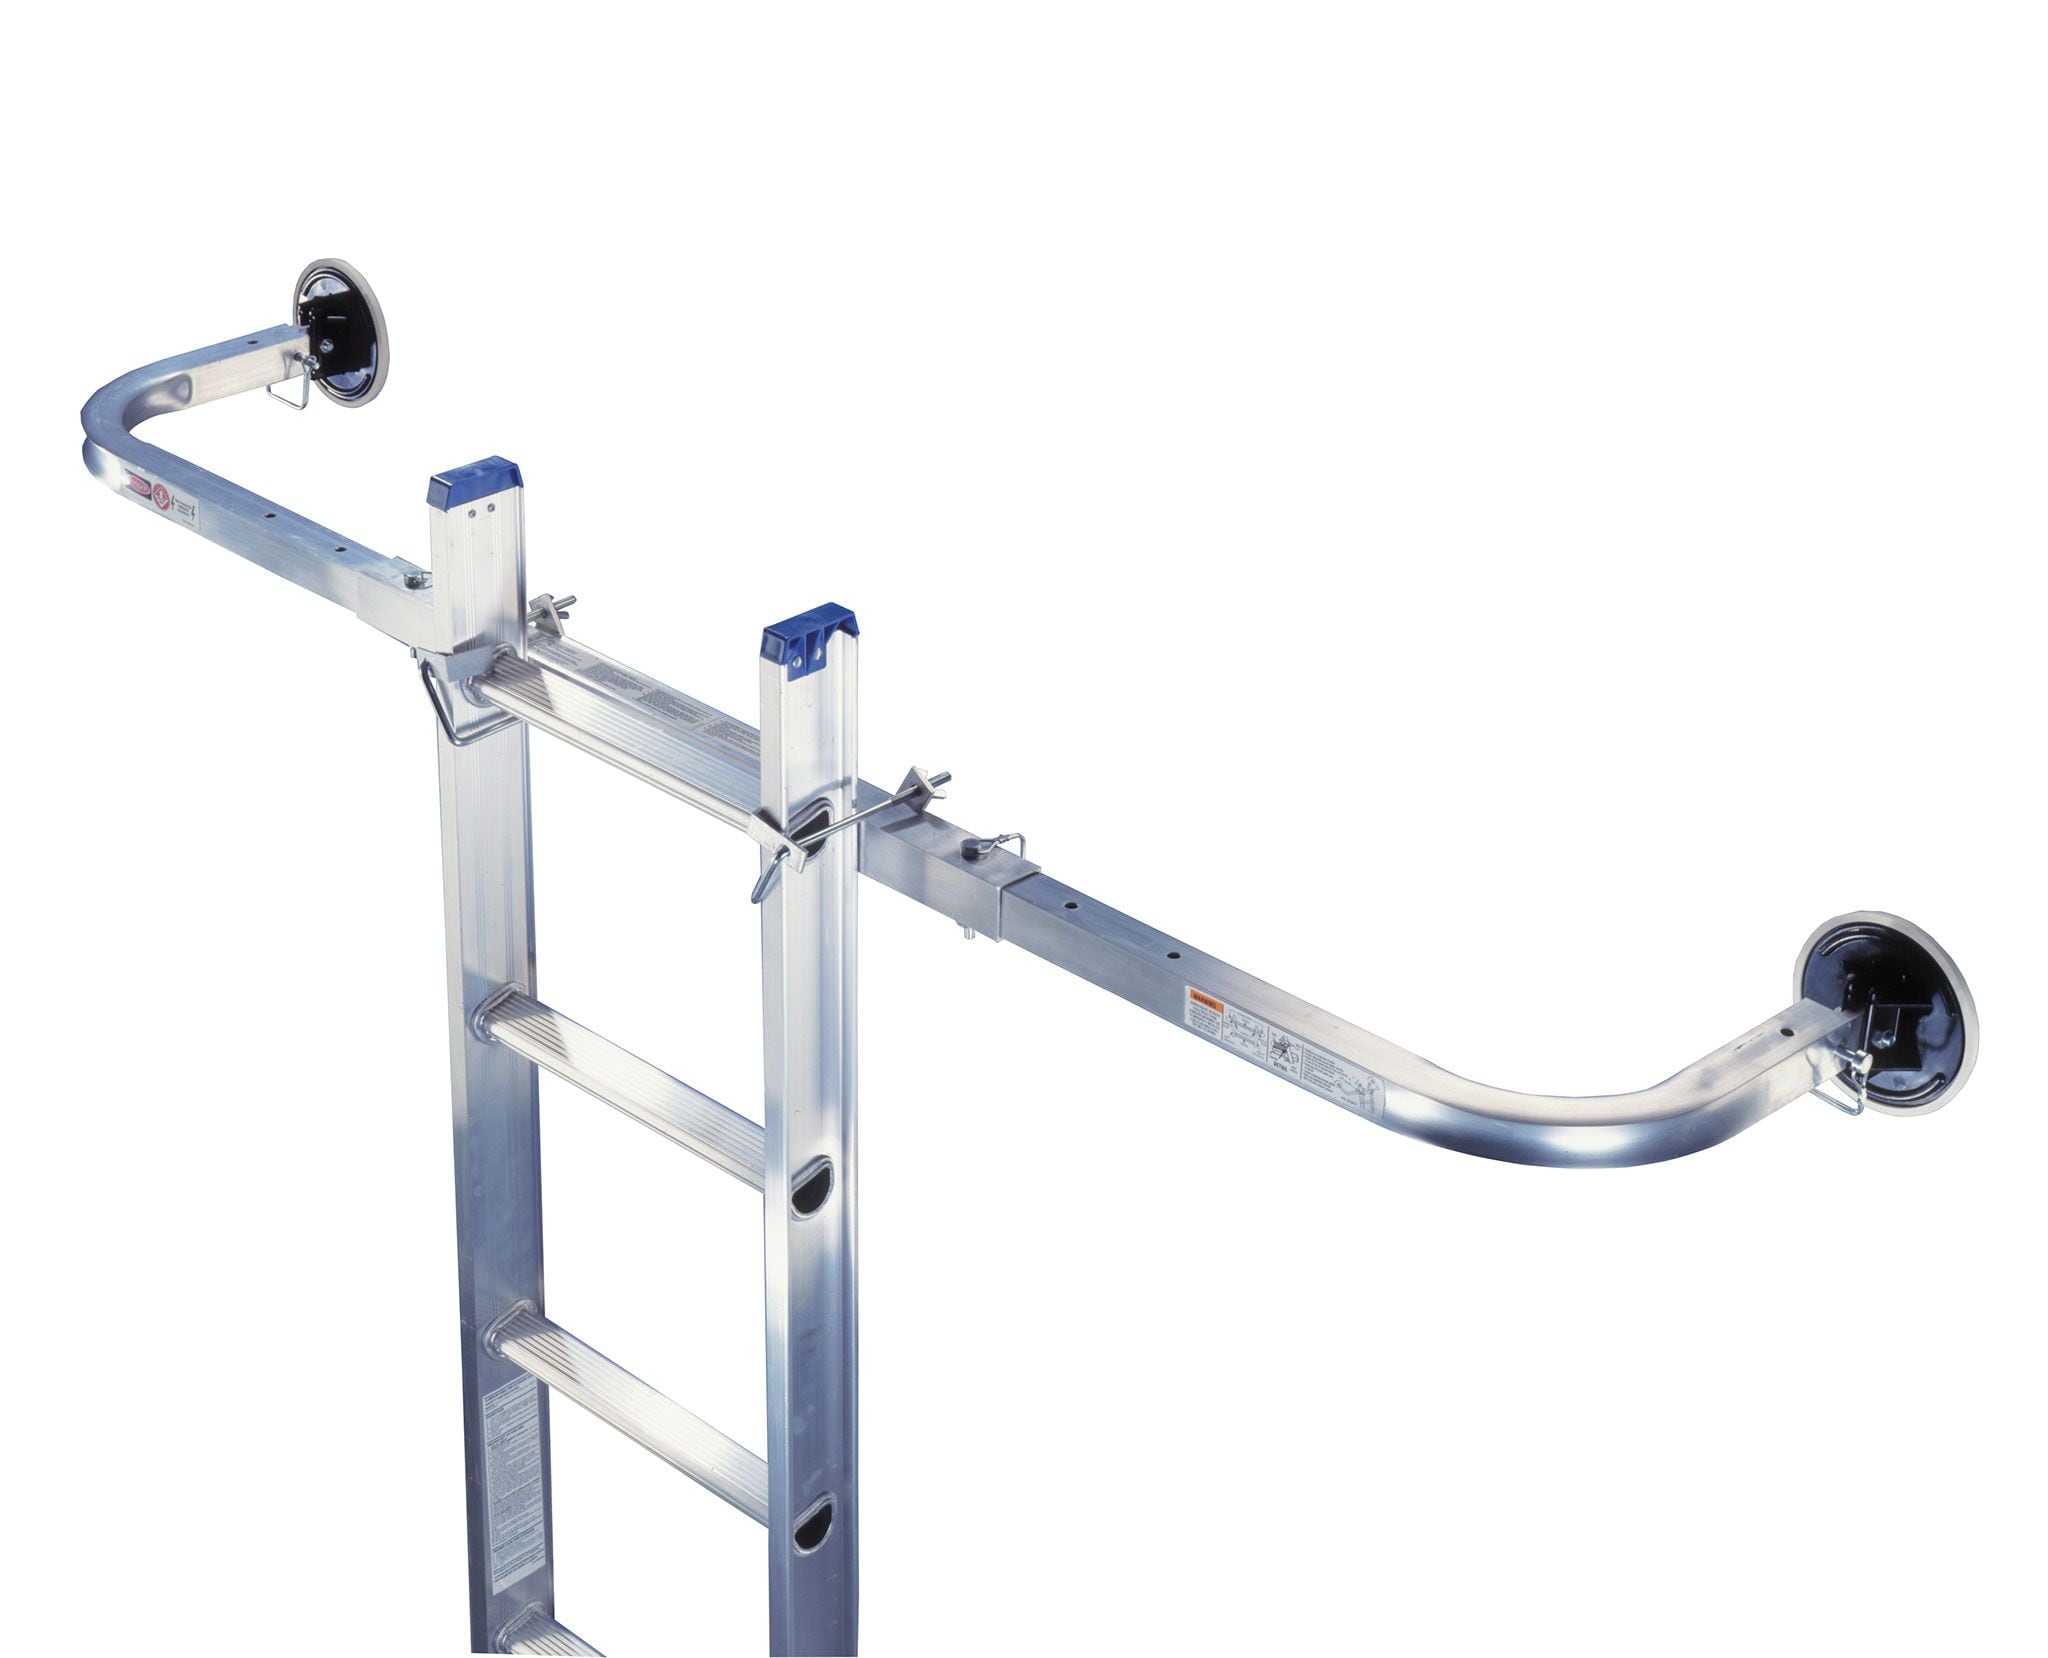 ProtectionPro Aluminum Ladder Stabilizer